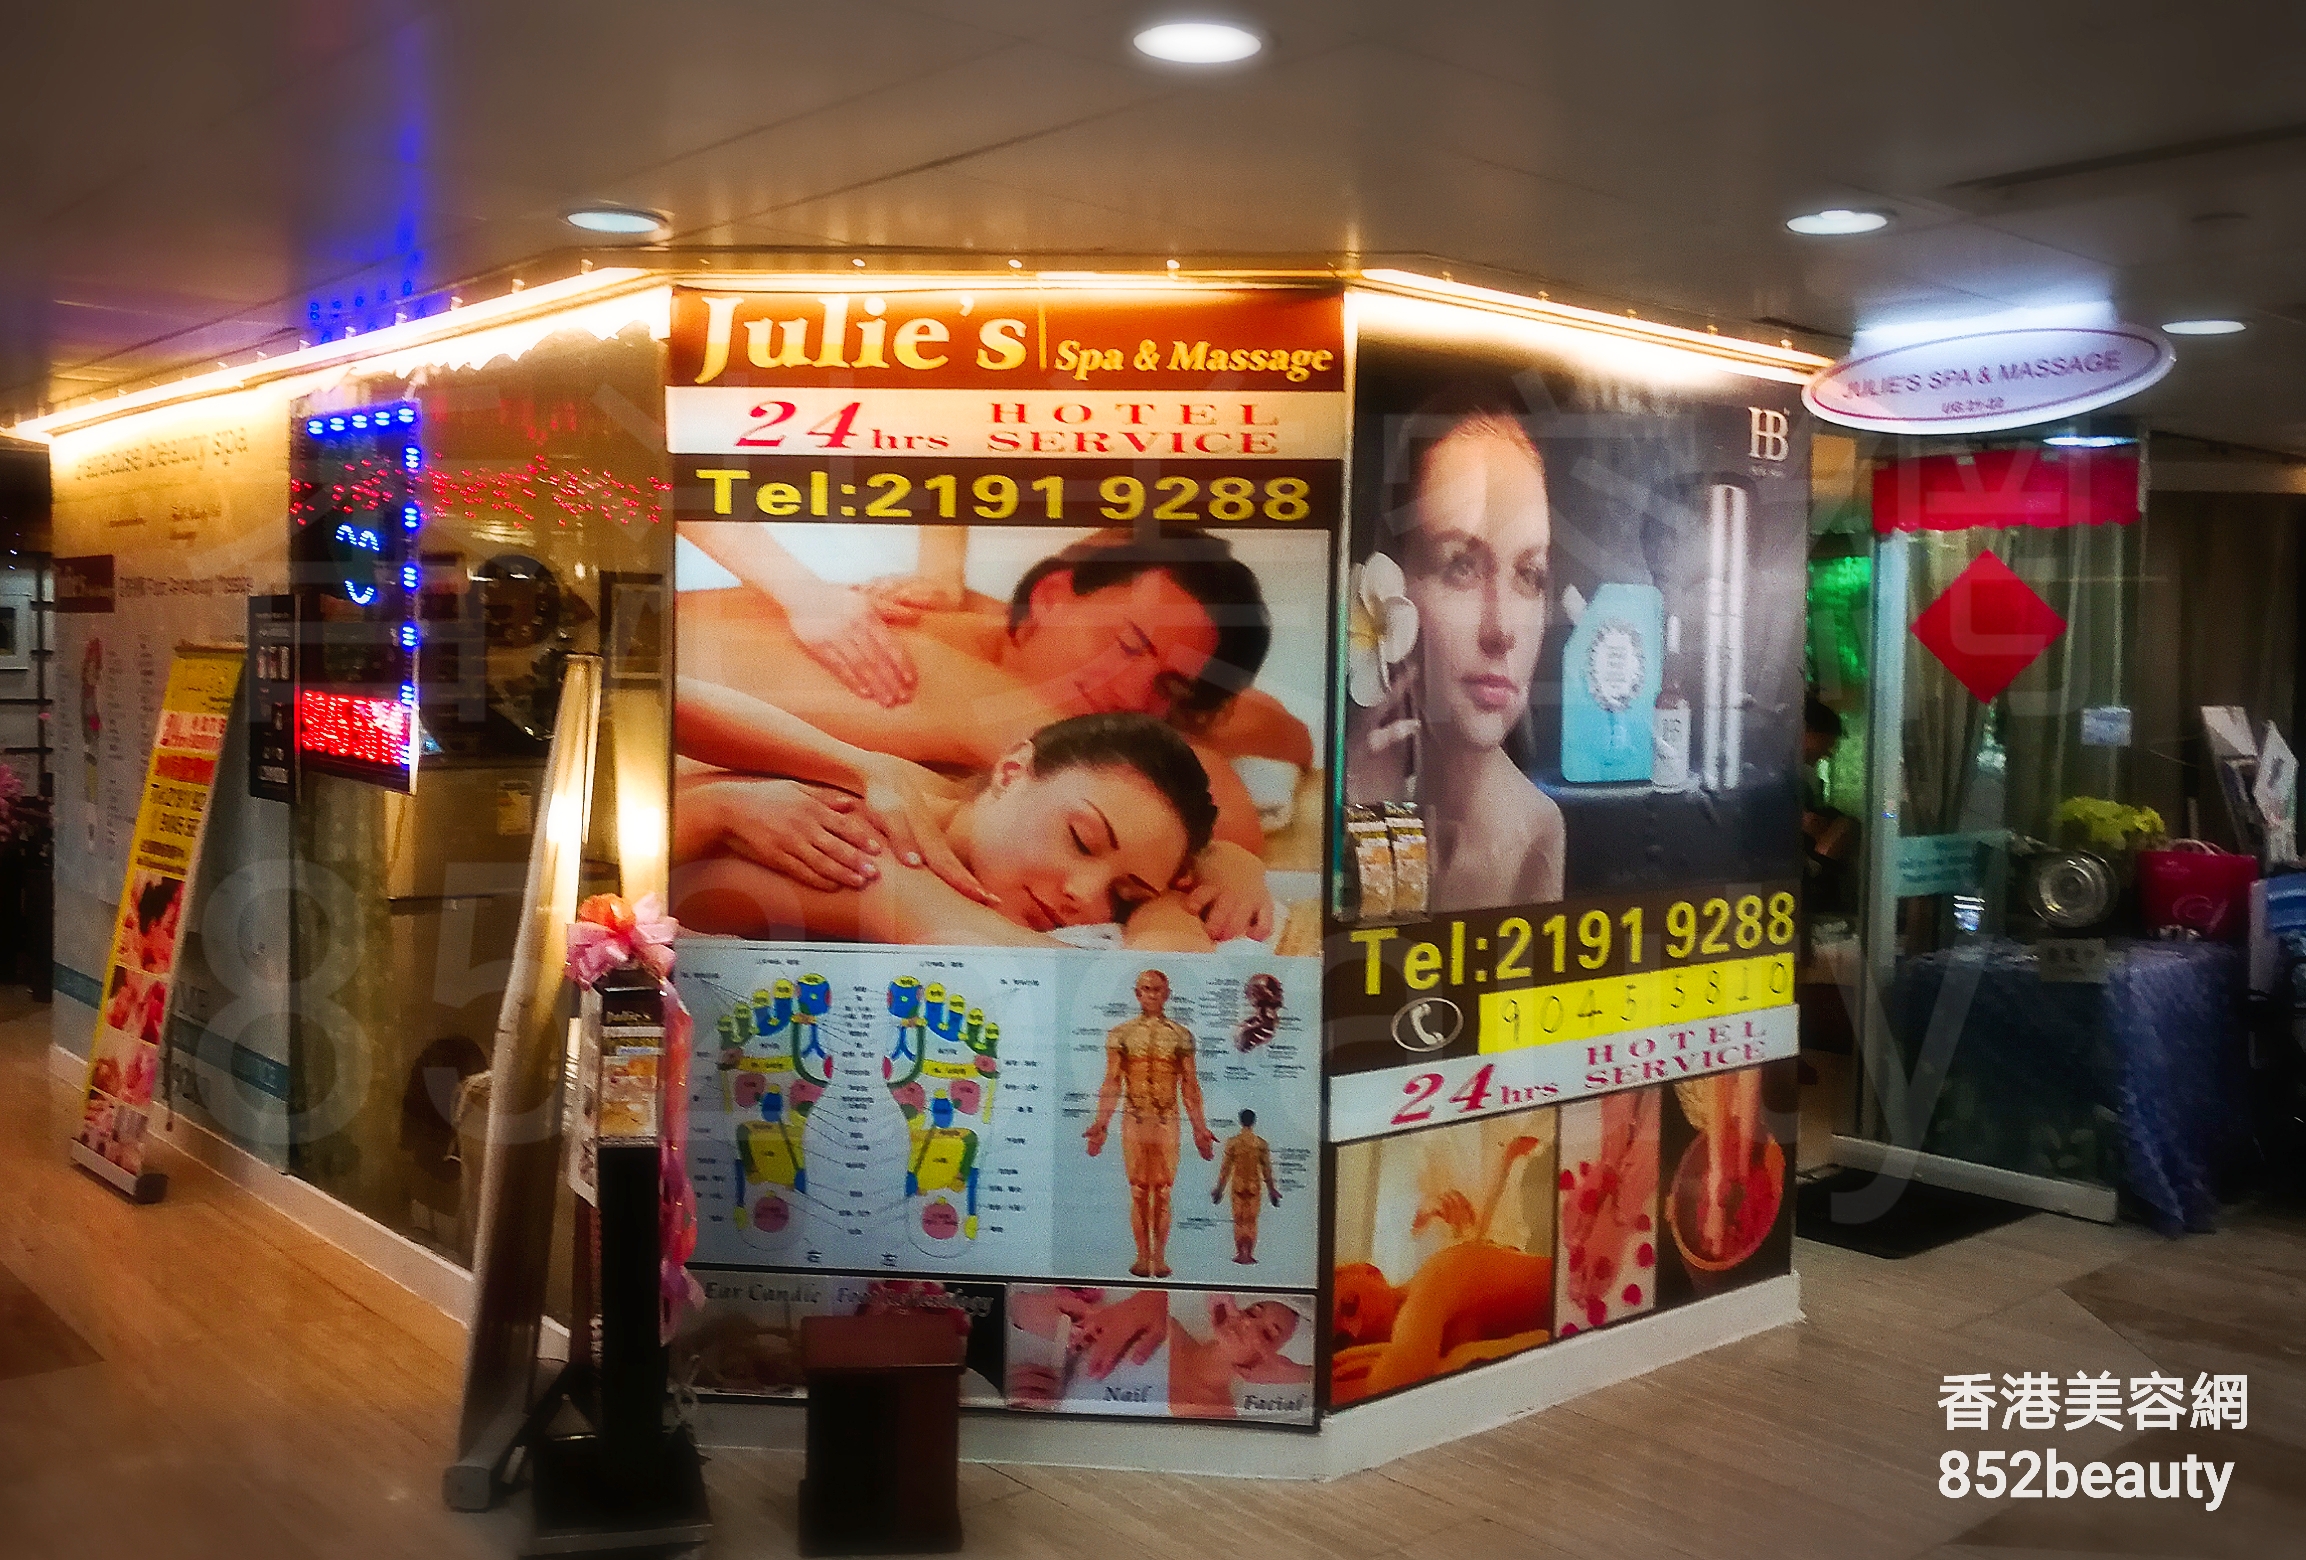 香港美容網 Hong Kong Beauty Salon 美容院 / 美容師: Julie's Spa & Massage